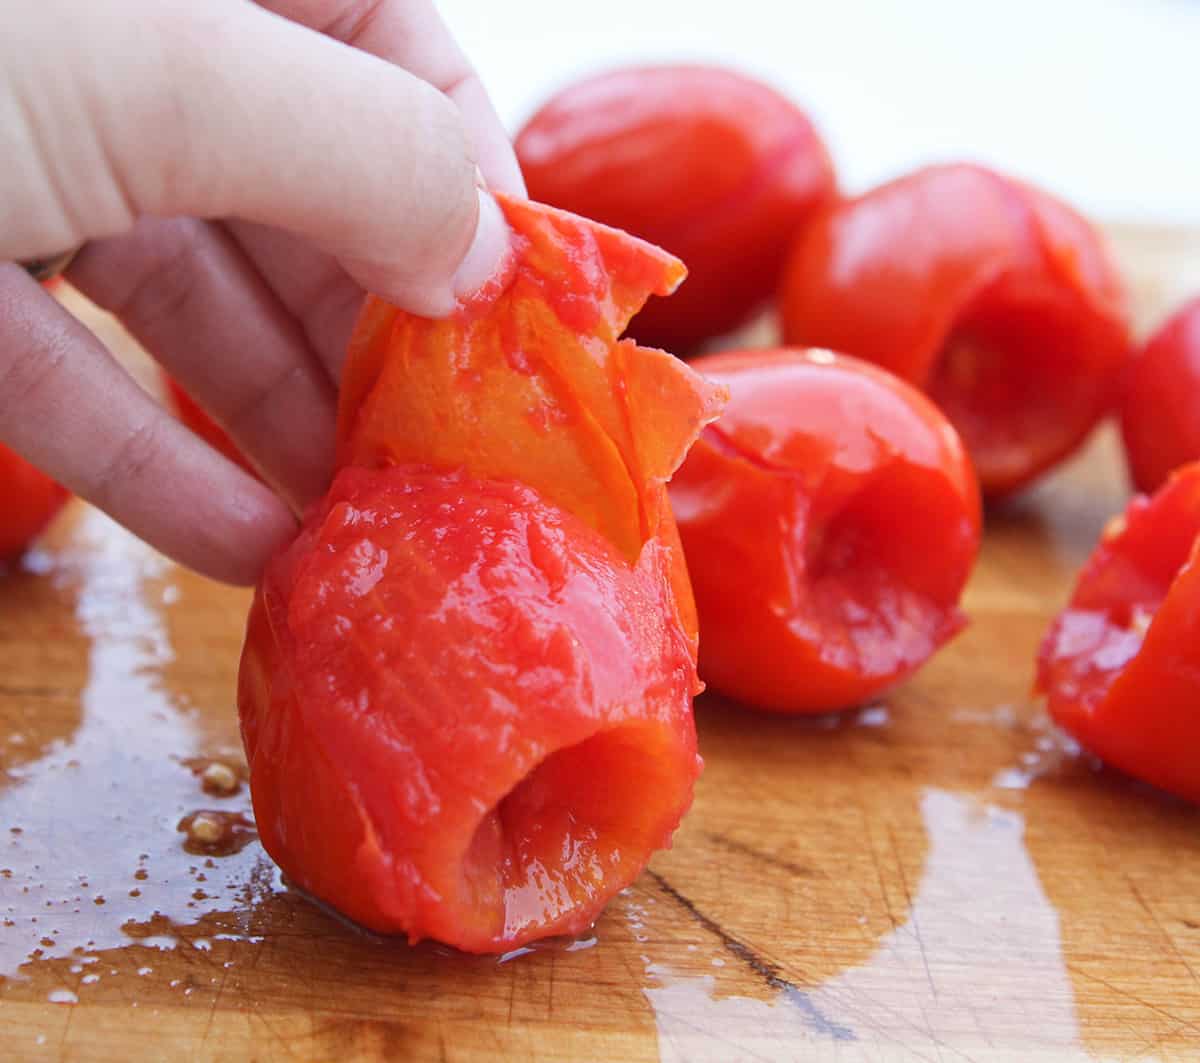 Fingers peeling skin off tomato on cutting board.